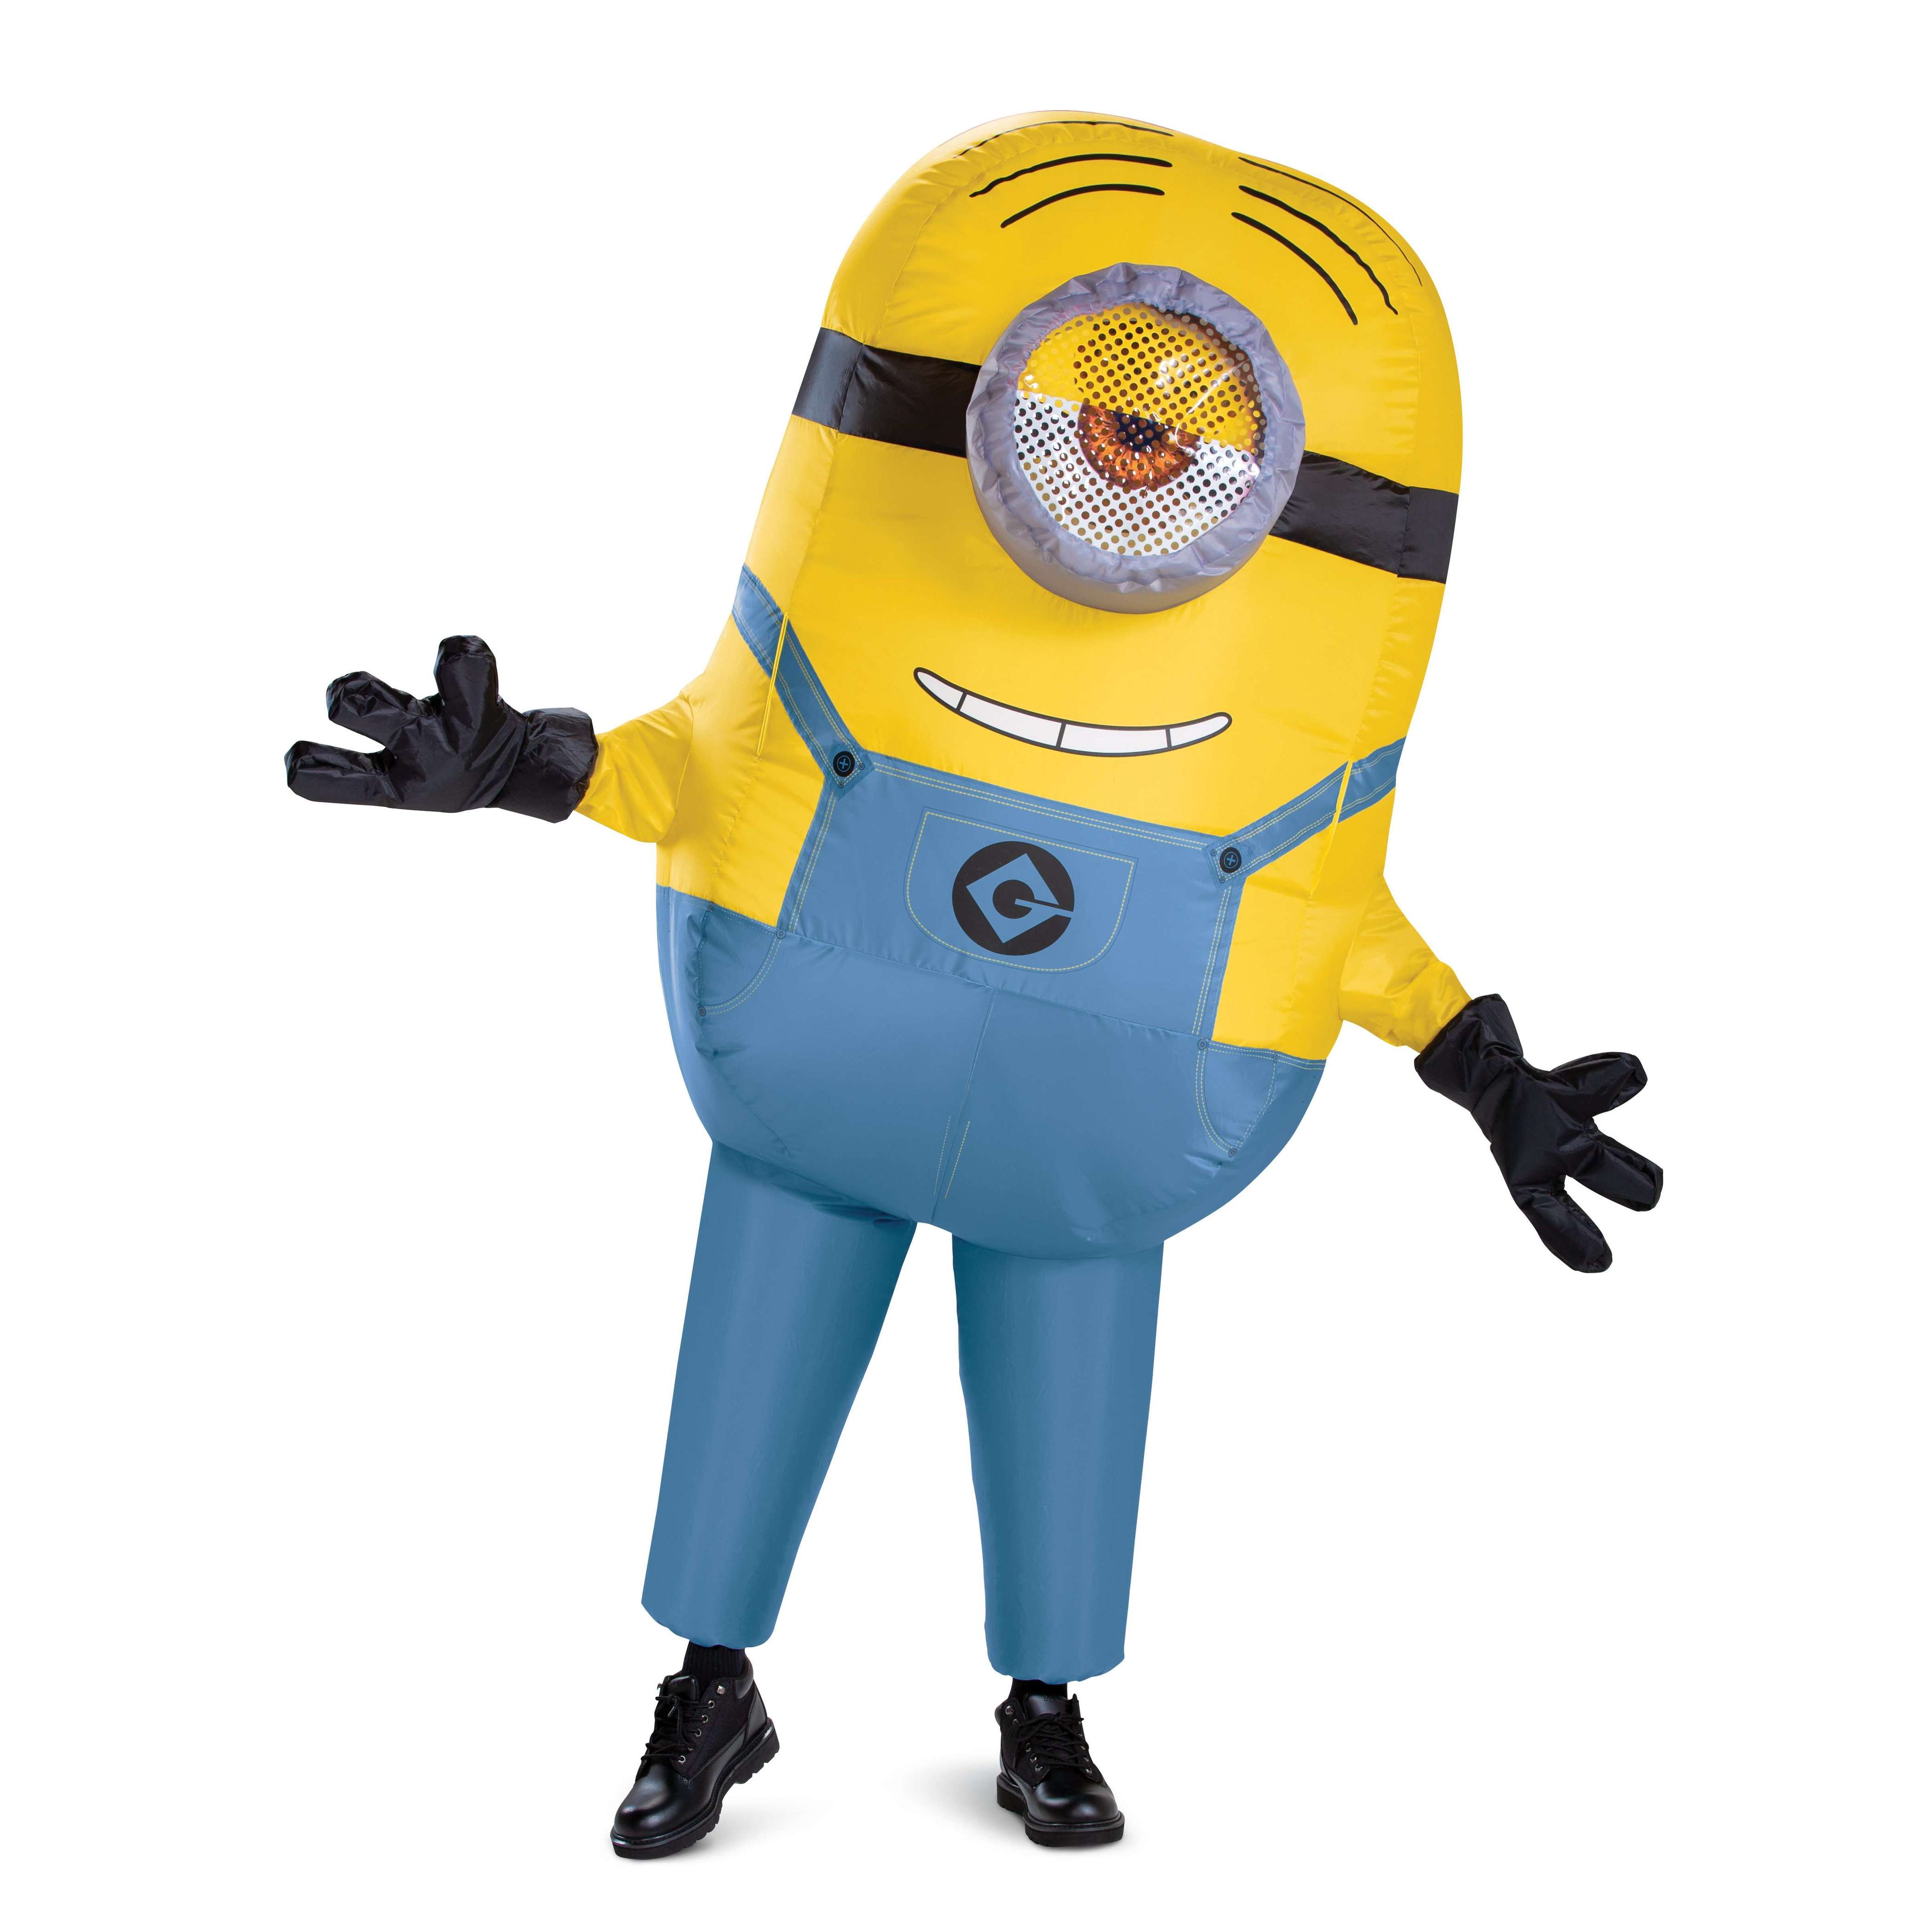 The Minions Inflatable Adult Minion Stuart Costume